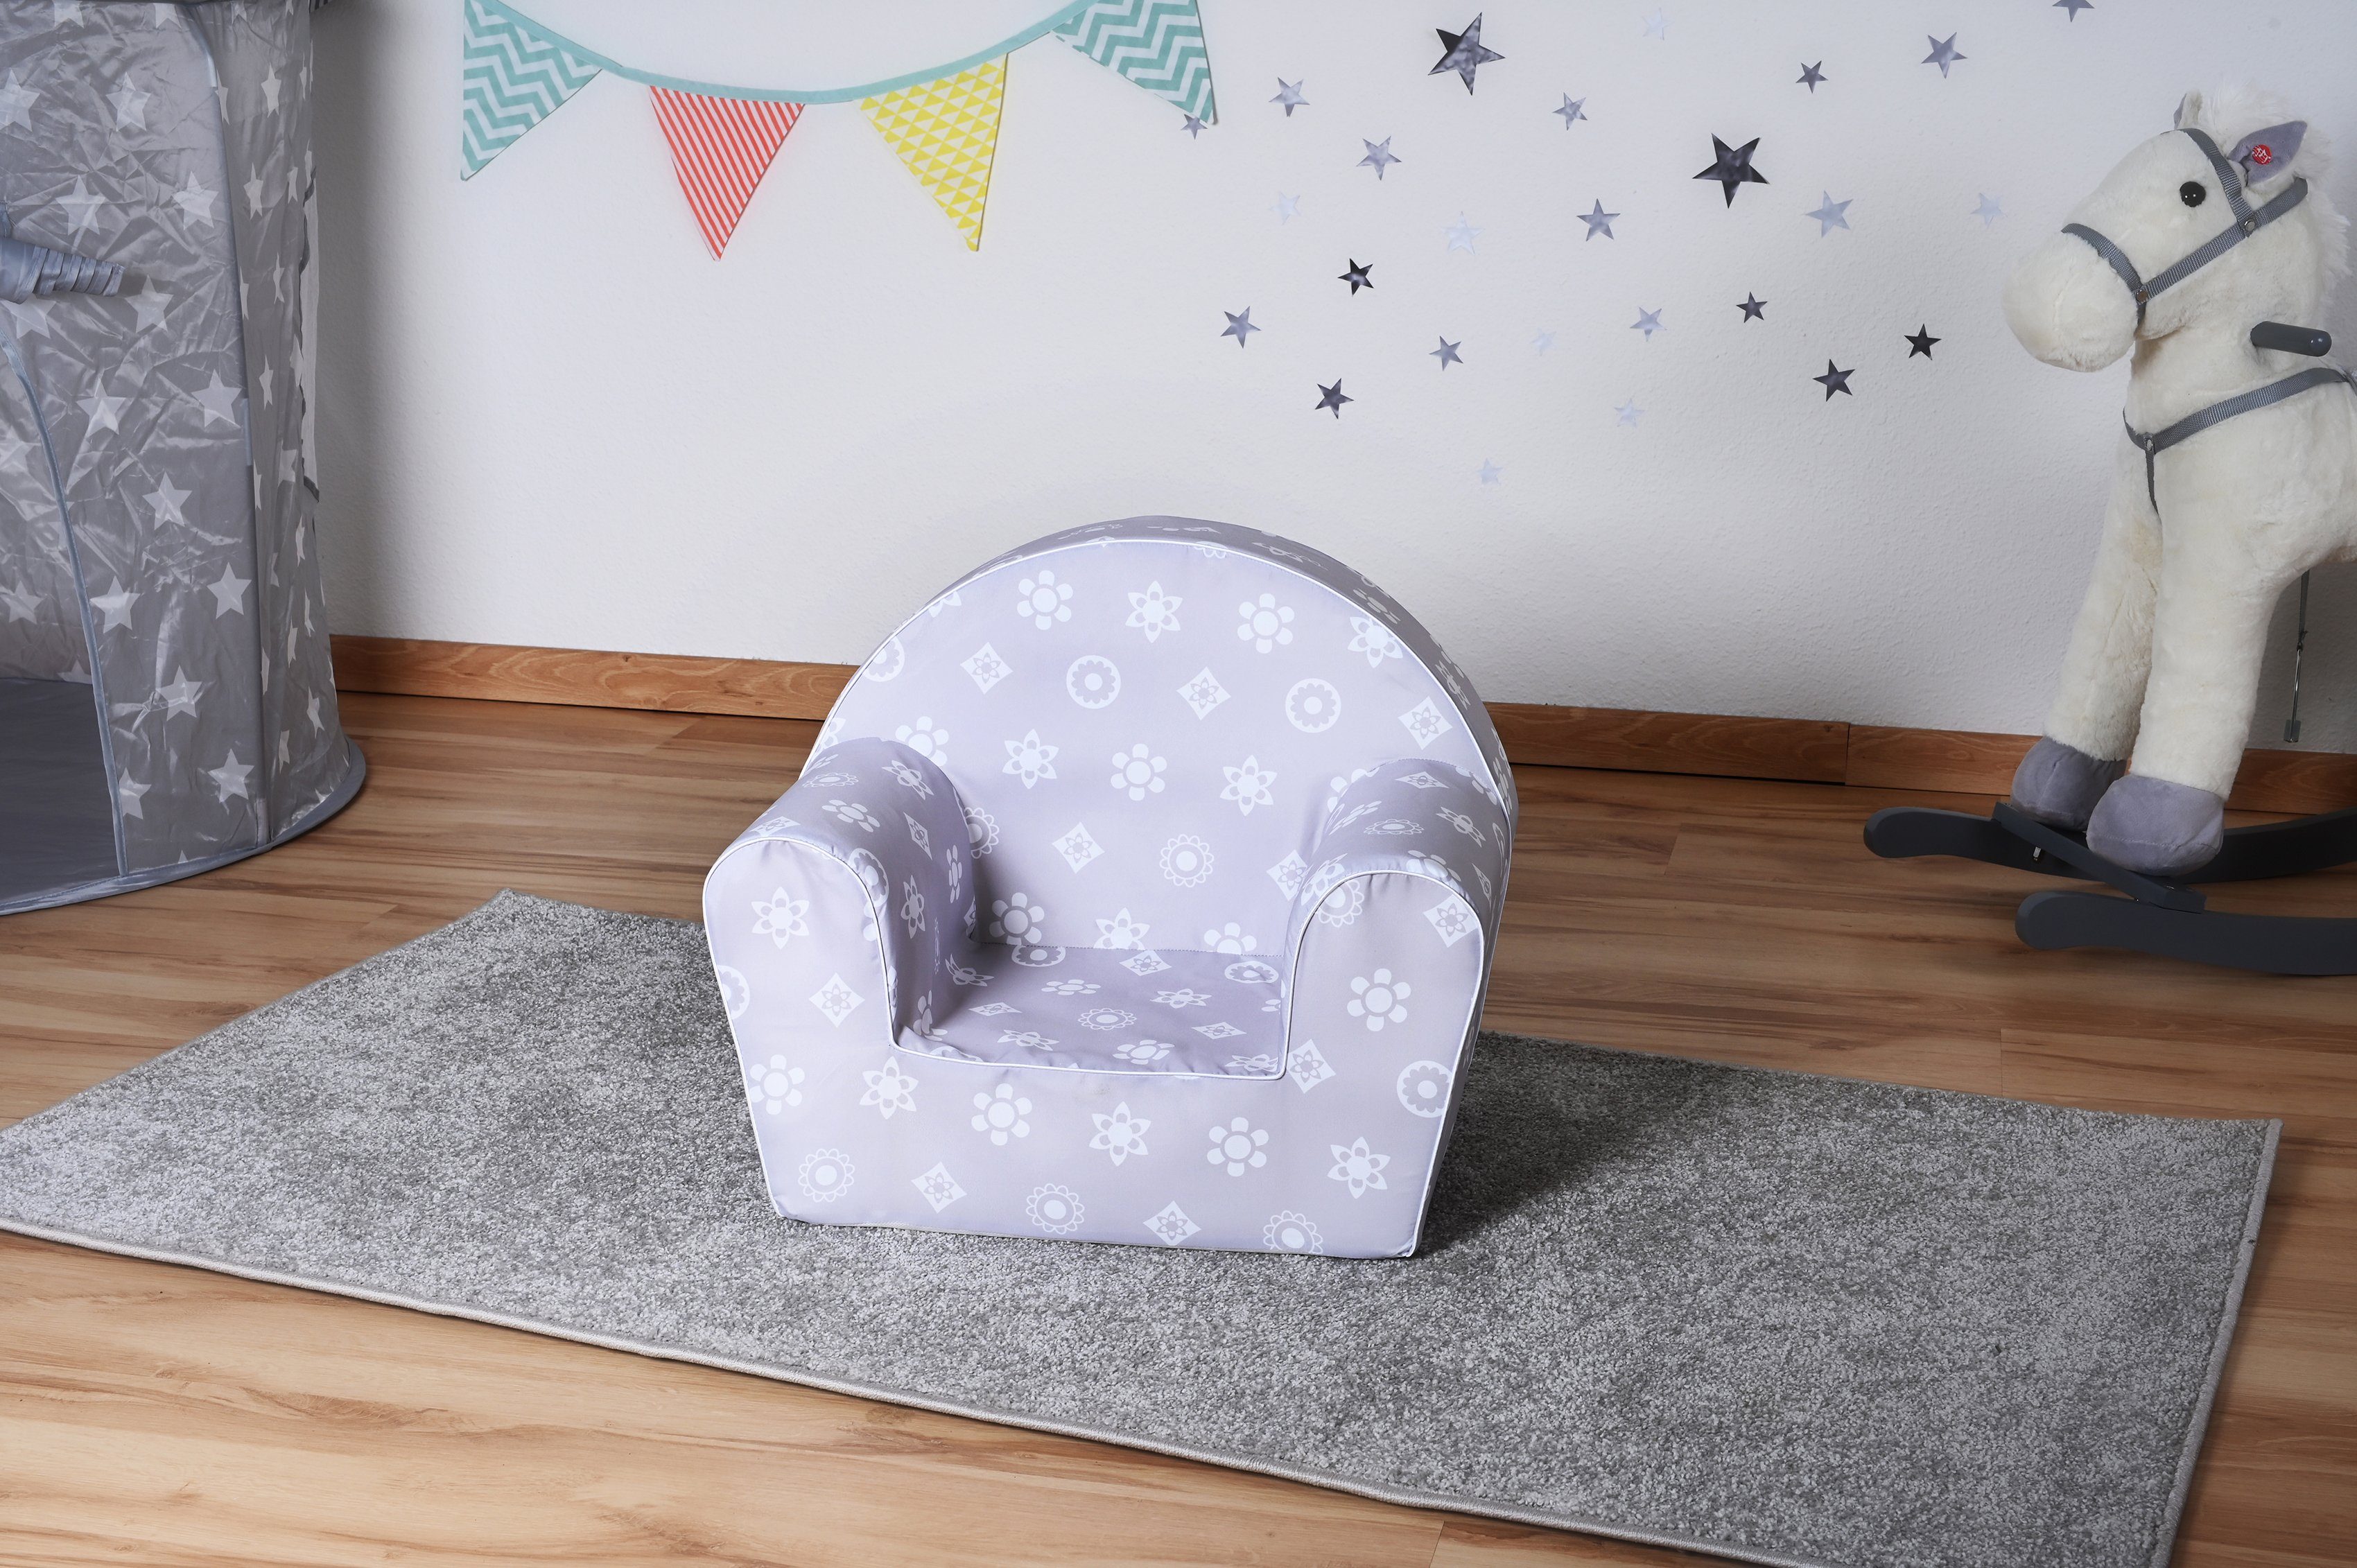 Knorrtoys® Sessel Royal Grey, für in Made Europe Kinder